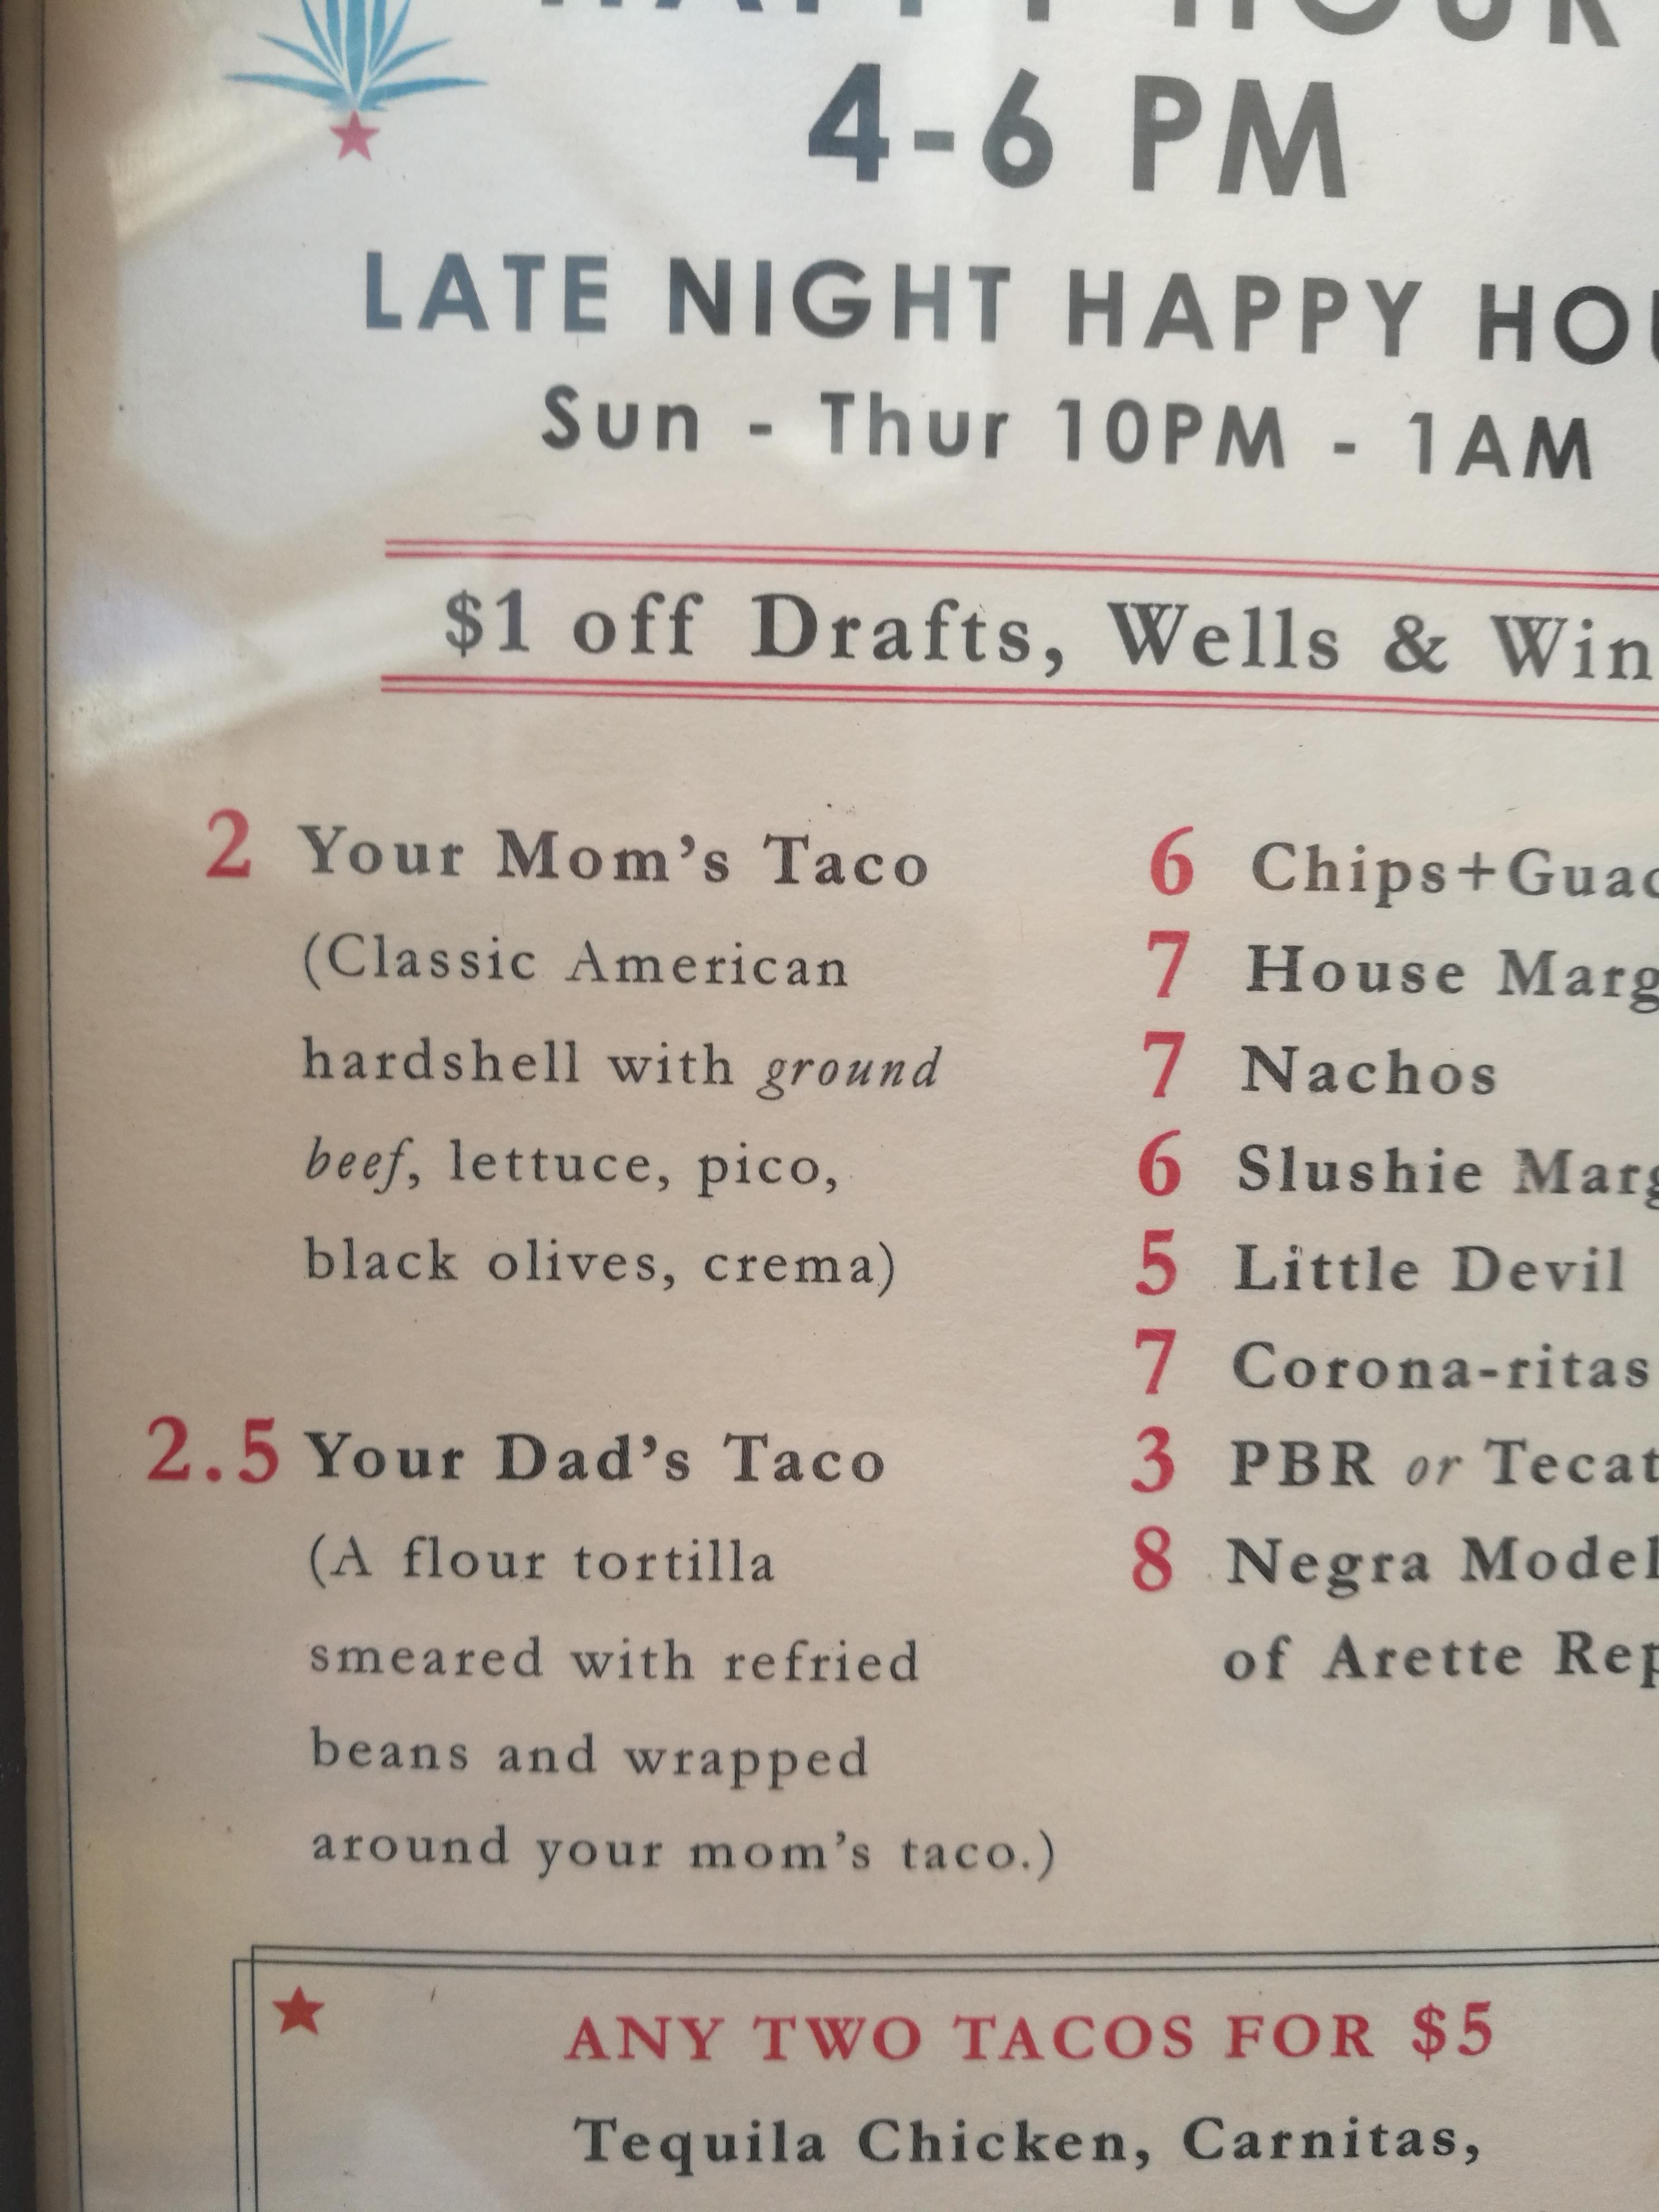 Your Dad's Taco.